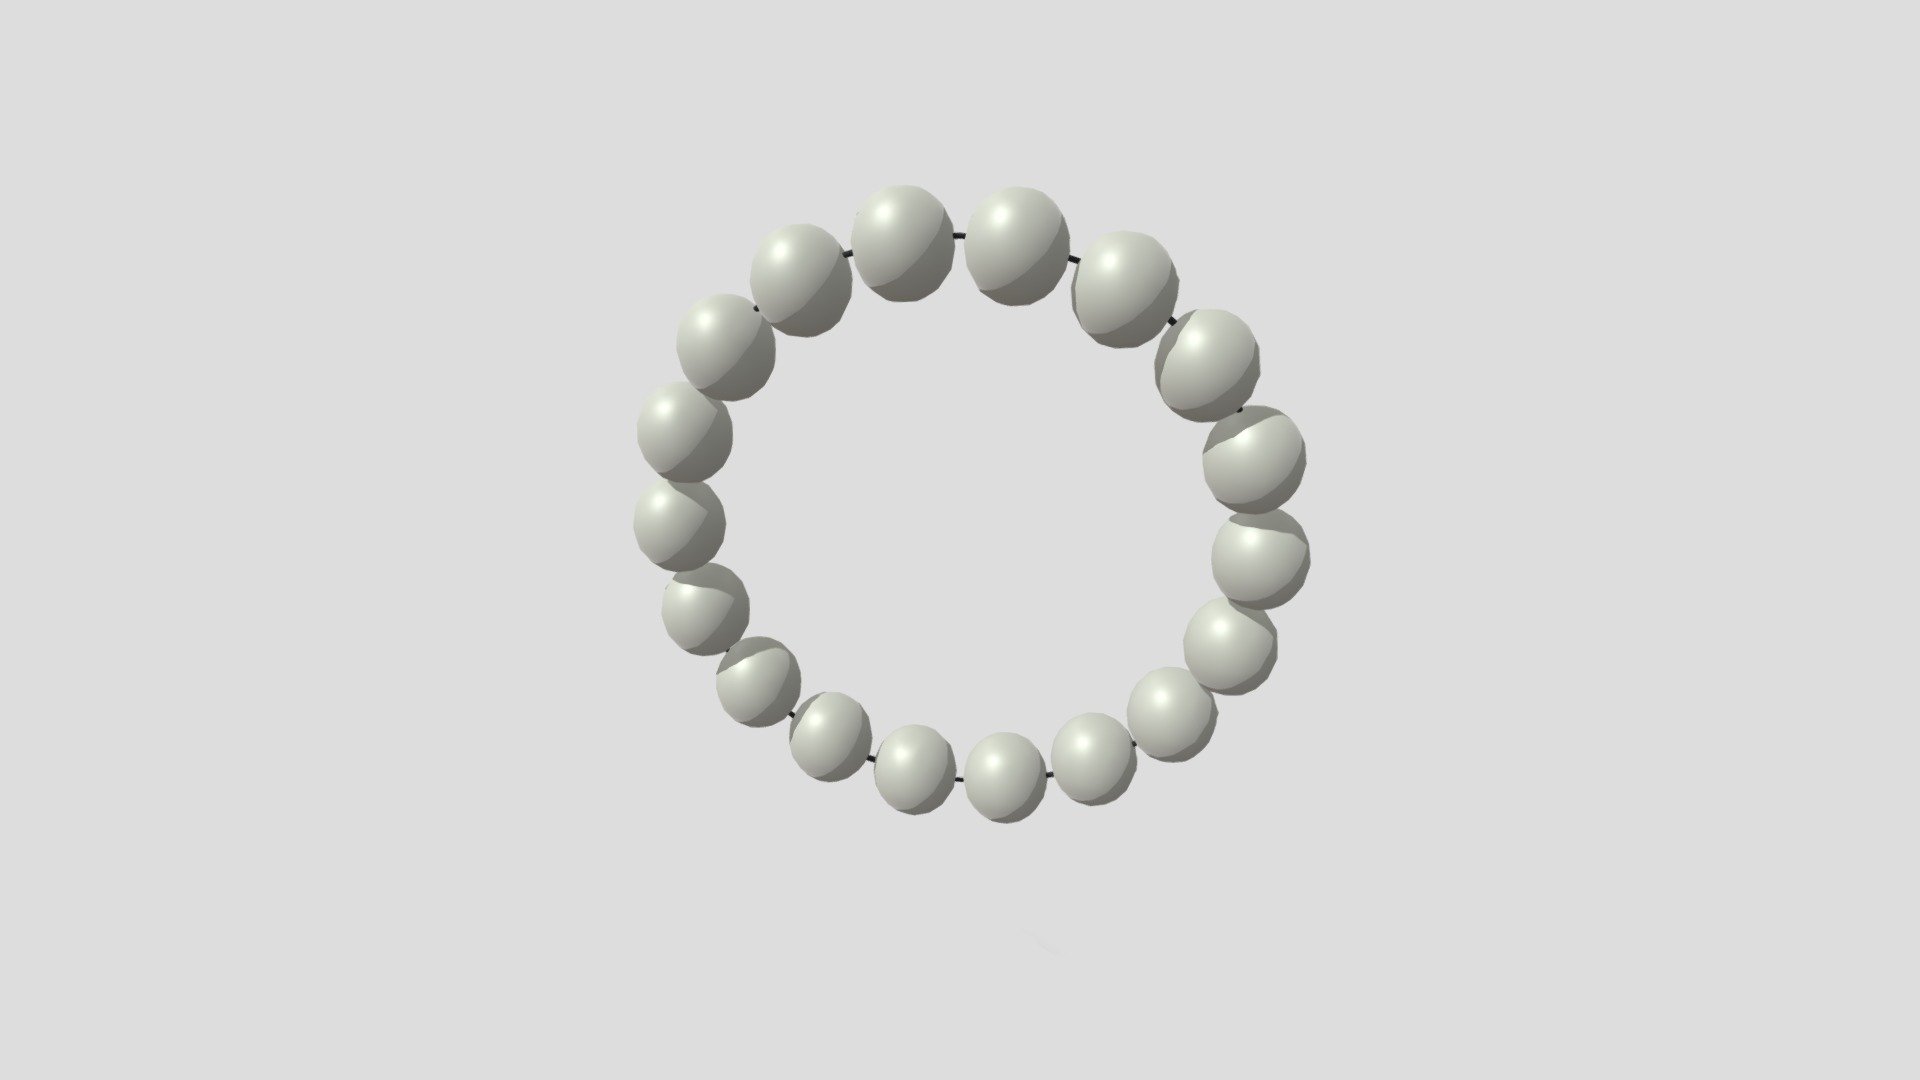 blenderで初めて作成した真珠のブレスレットです。
真珠は大きめで18粒を黒いワイヤーで繋いでいます。 - Pearl Bracelet - 3D model by YaoyorozTech.Ltd (@avatar-matou) 3d model